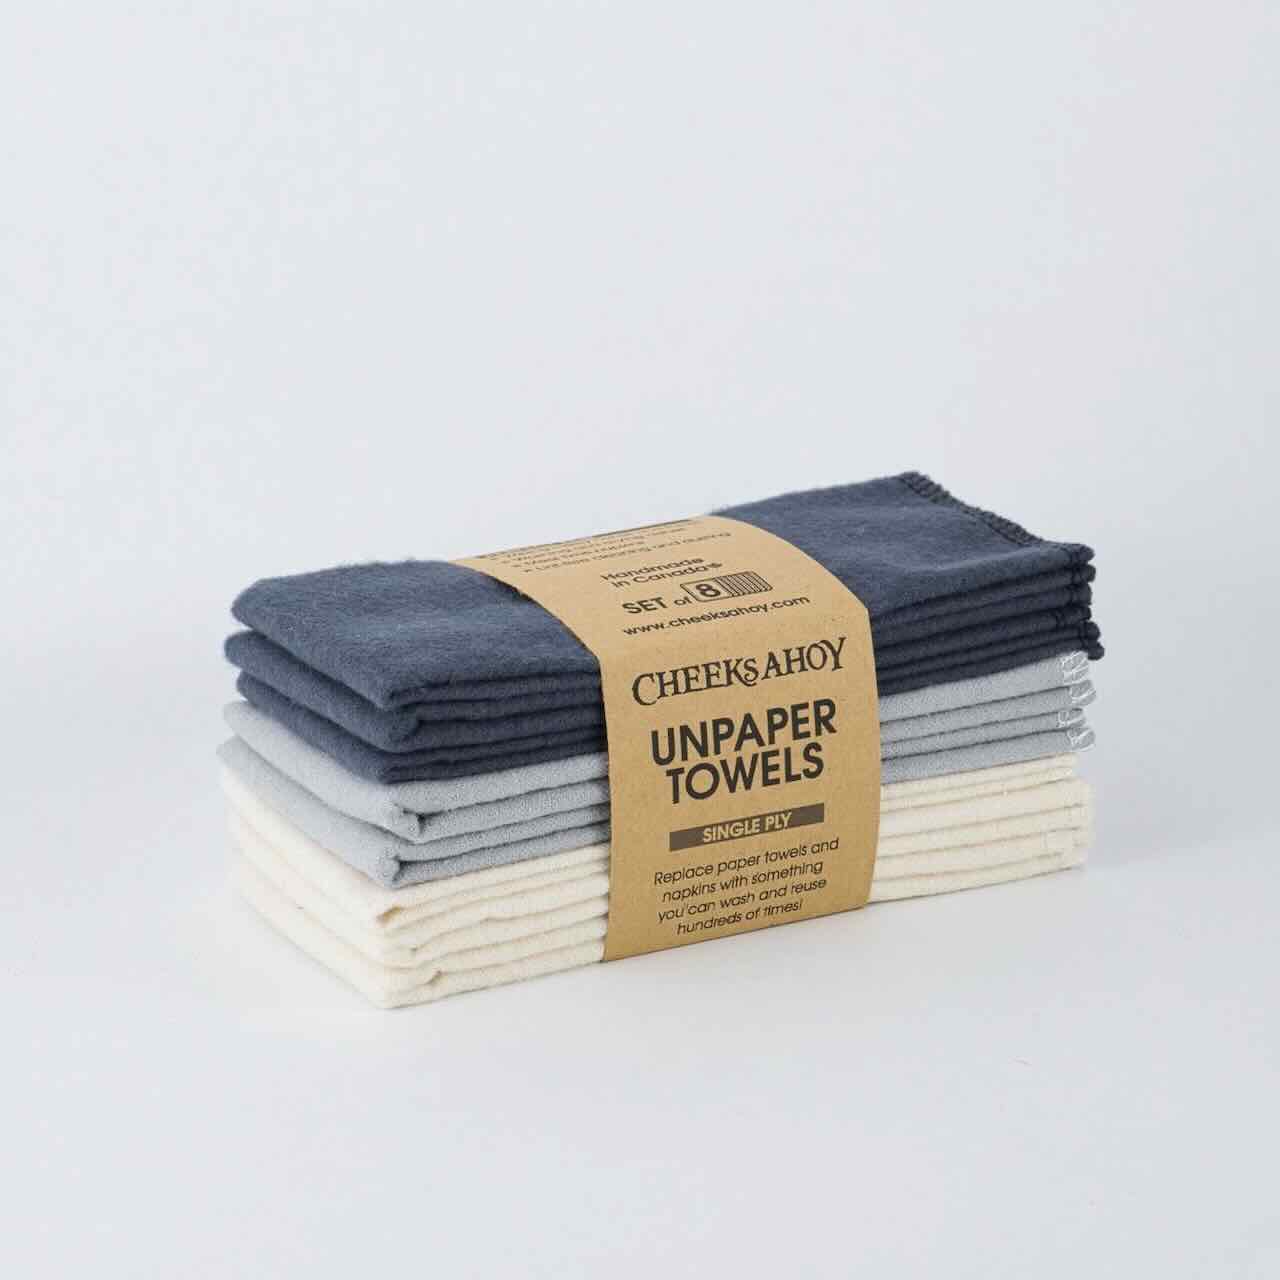 cheeks ahoy warm charcoal unpaper towels set of 8 on top of a plain table top.